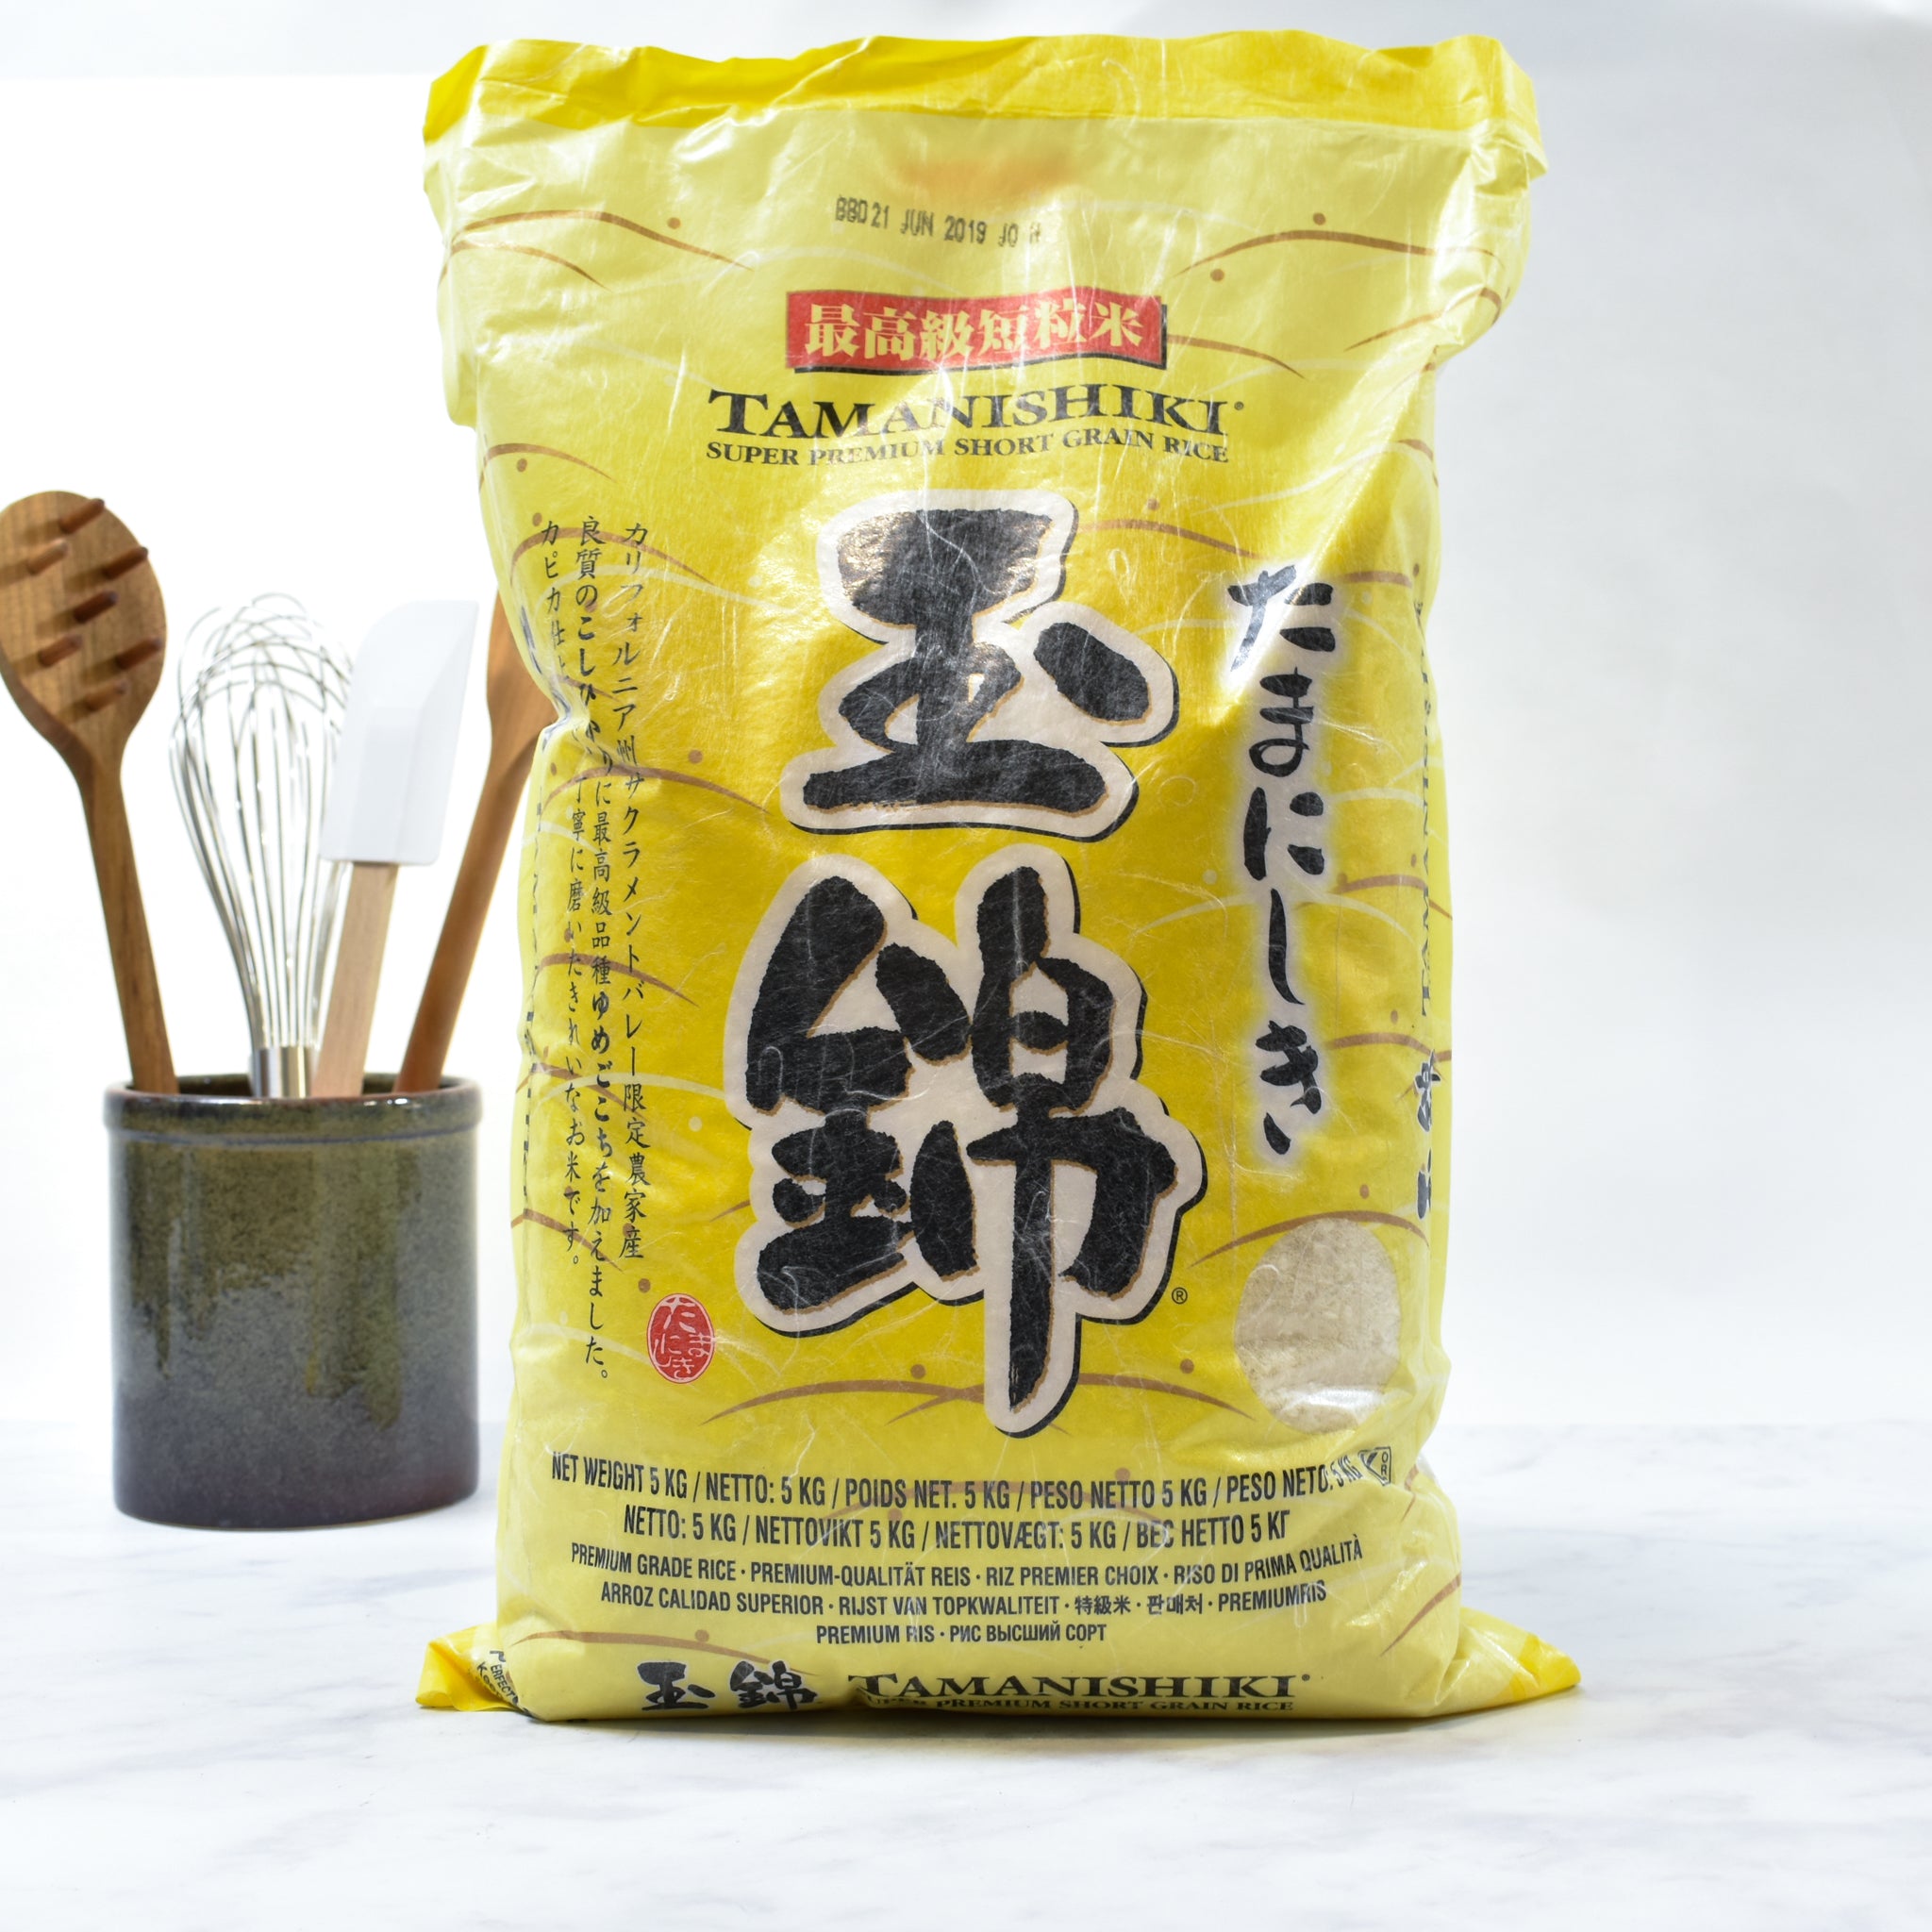 Tamanishiki Short Grain Sushi Rice 5kg lifestyle photograph